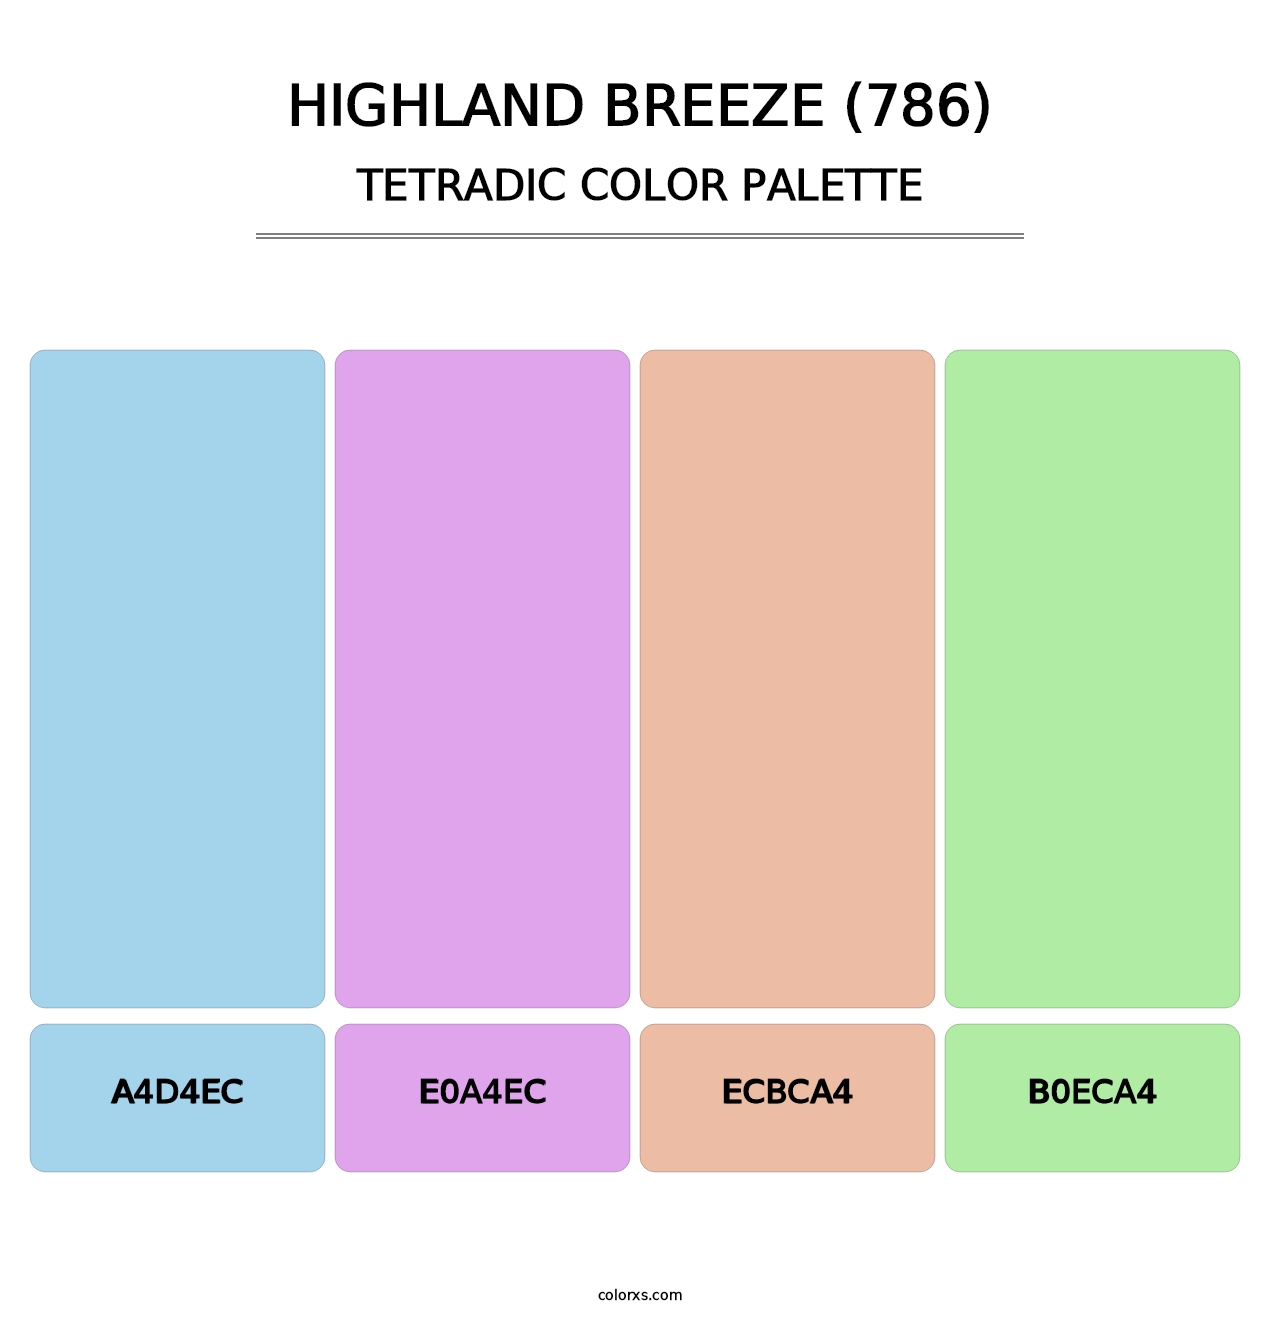 Highland Breeze (786) - Tetradic Color Palette